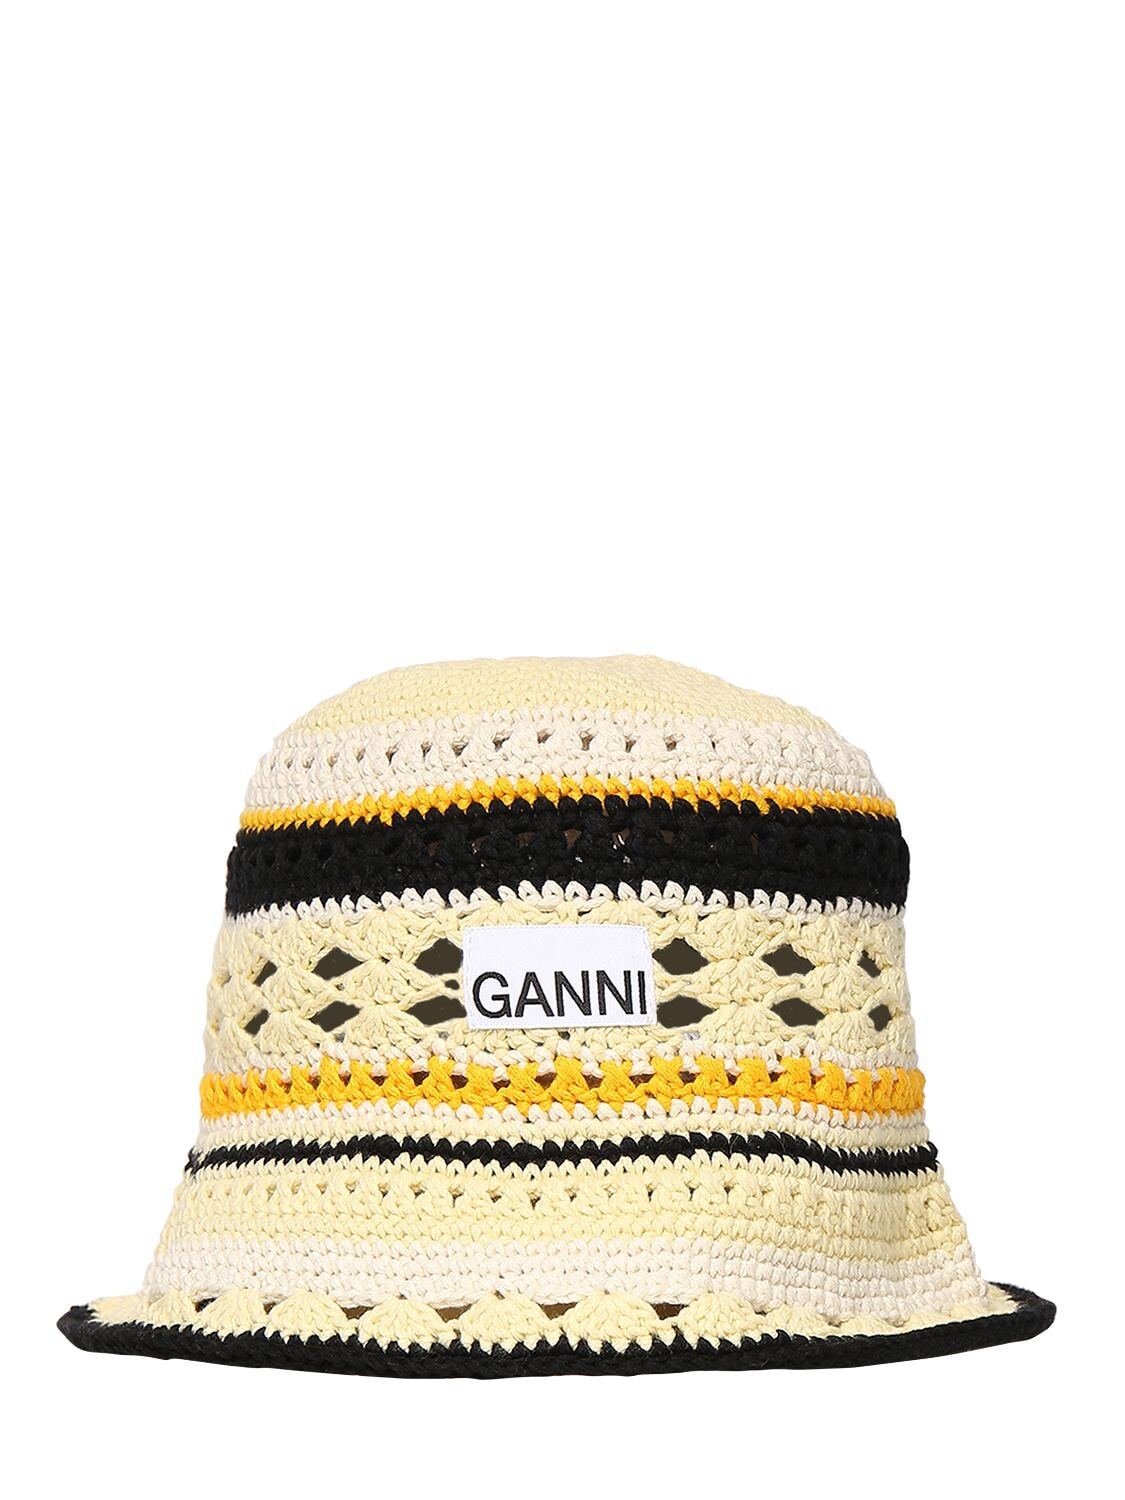 GANNI Crocheted Organic Cotton Bucket Hat